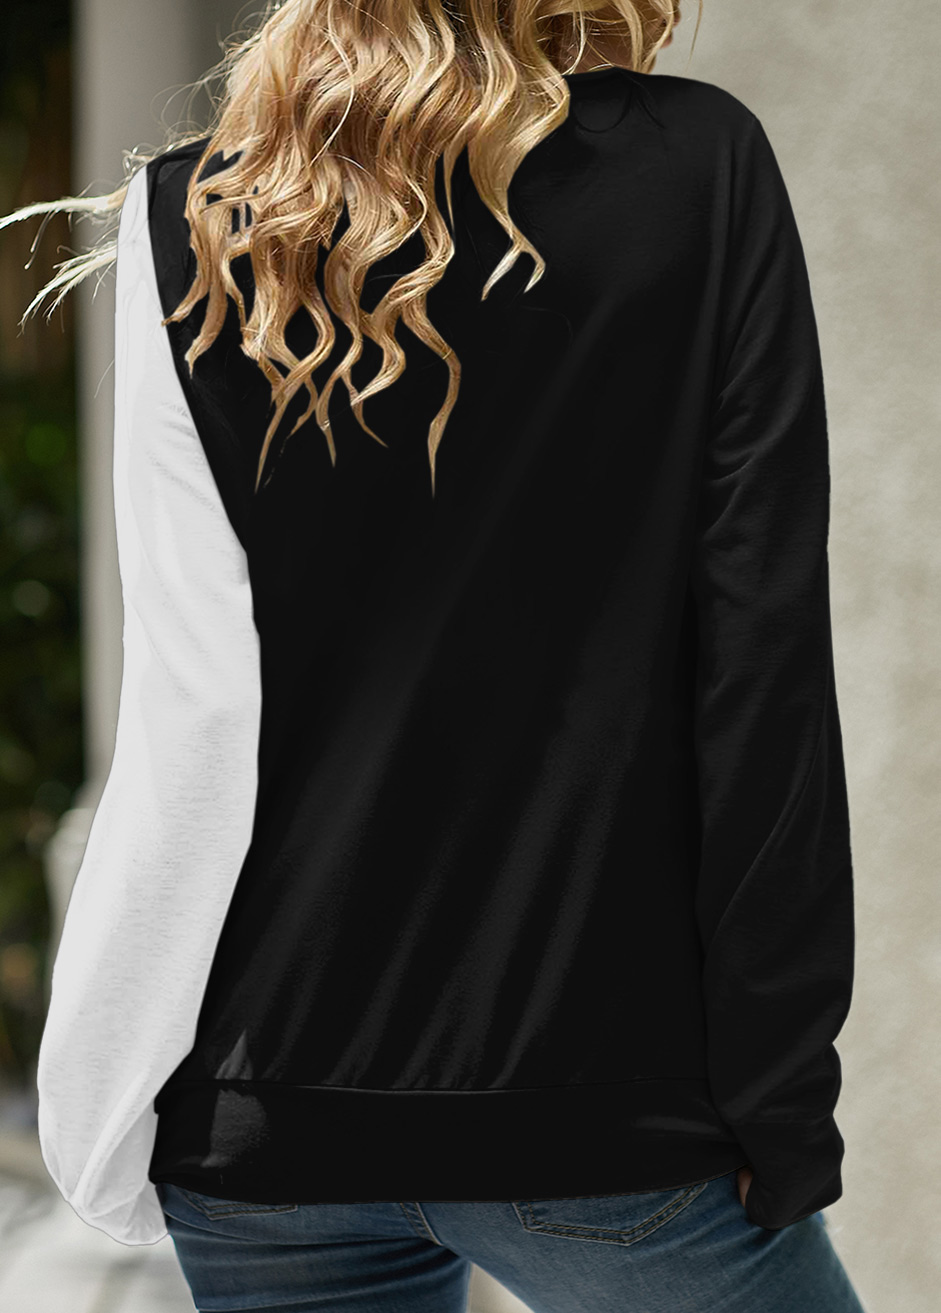 Floral Print Black Lace Up Long Sleeve Sweatshirt